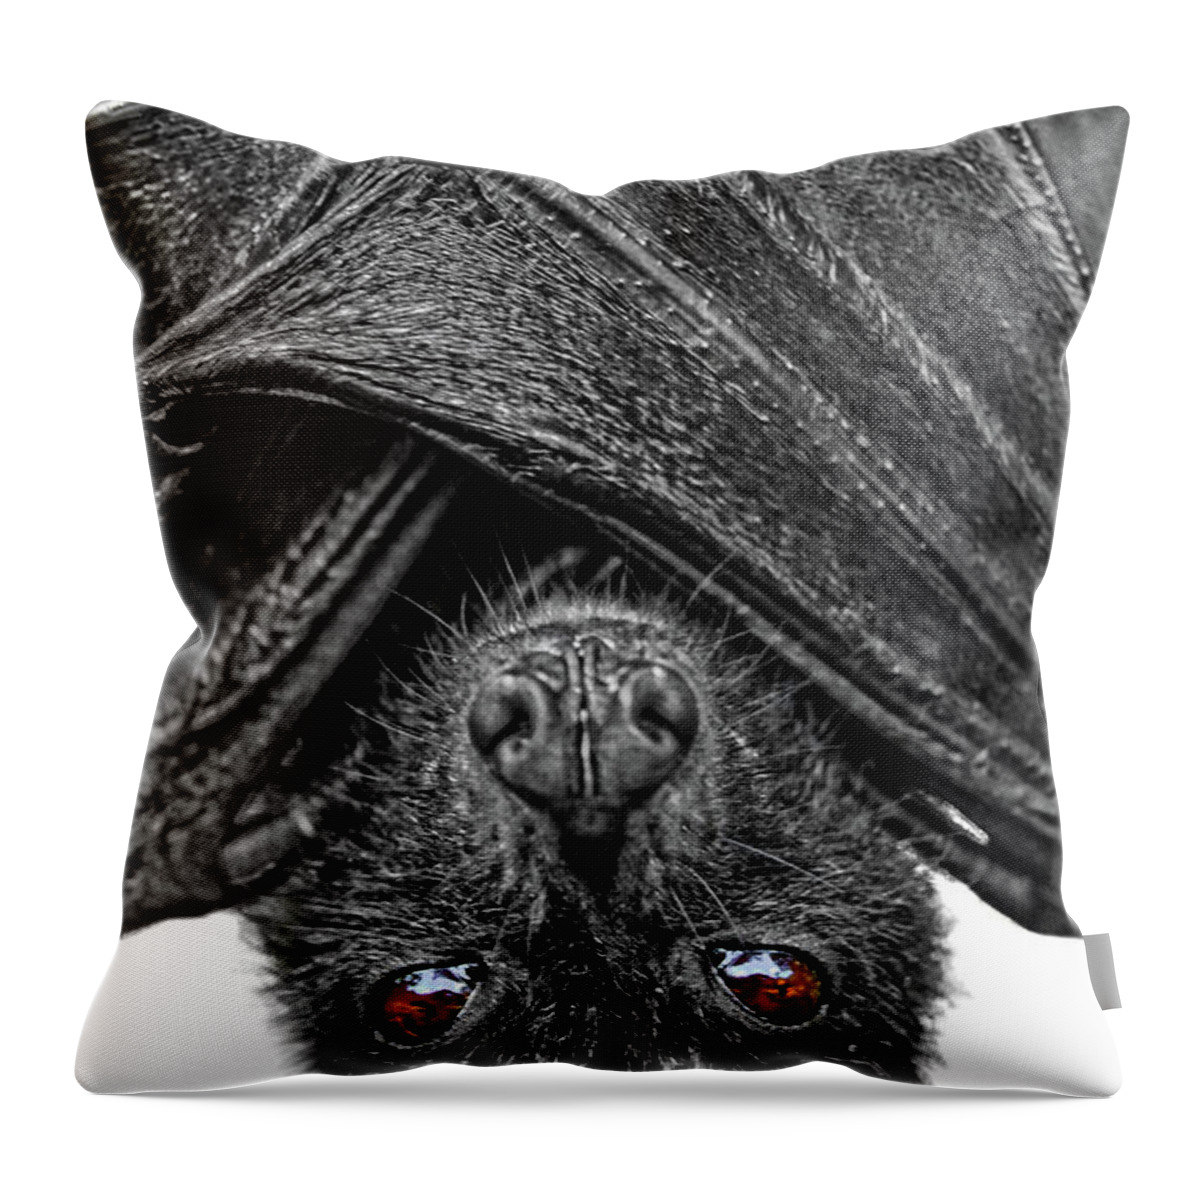 Bat Throw Pillow featuring the photograph Be Afraid by Yhun Suarez